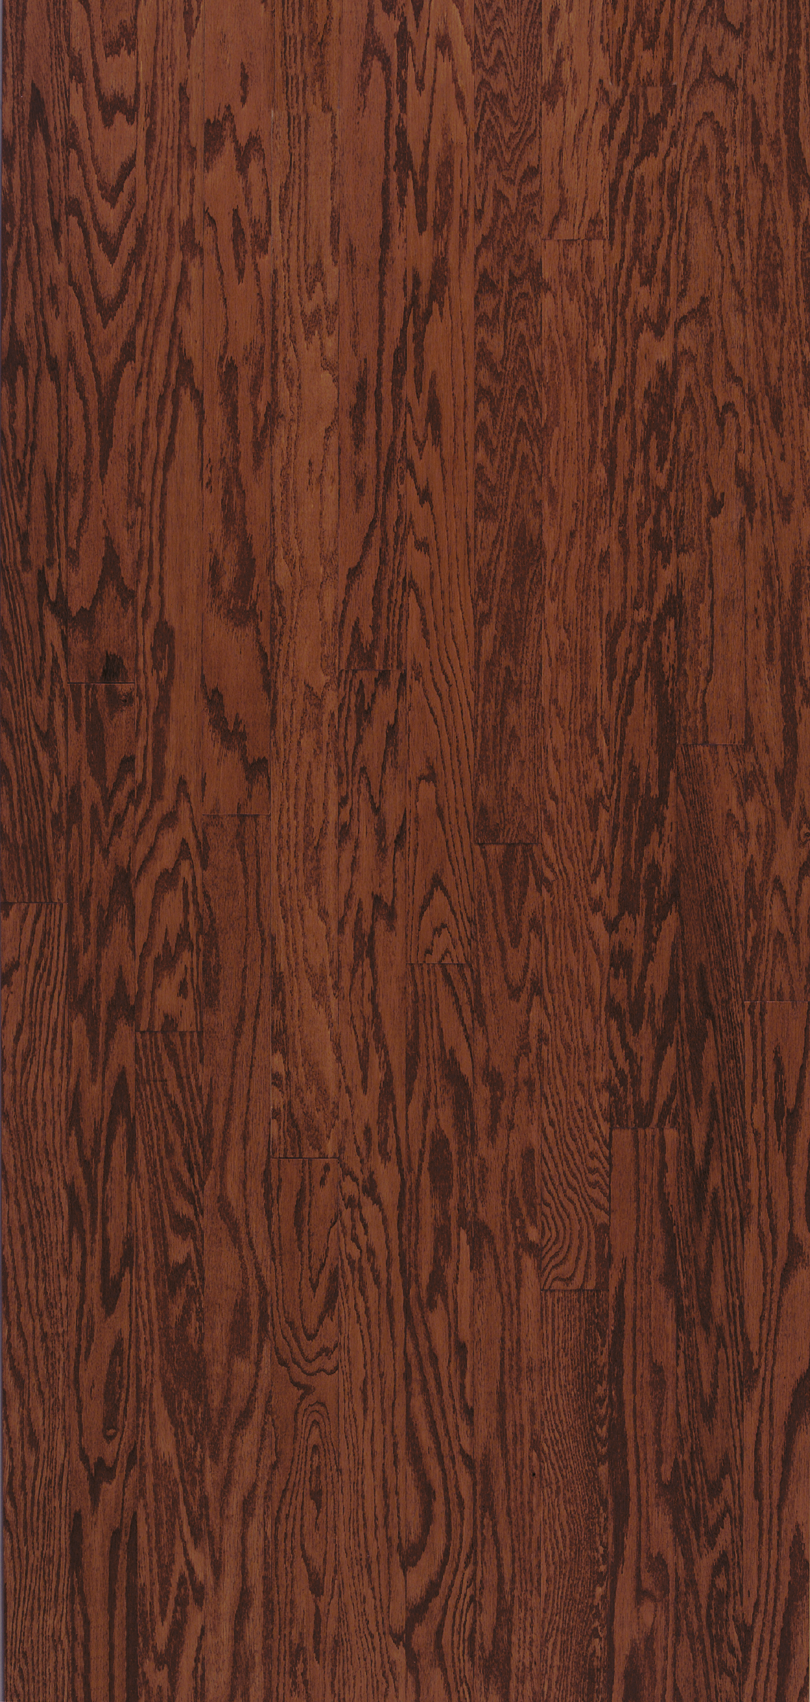 Cherry Oak 5" - Turlington Lock&Fold Collection - Engineered Hardwood Flooring by Bruce